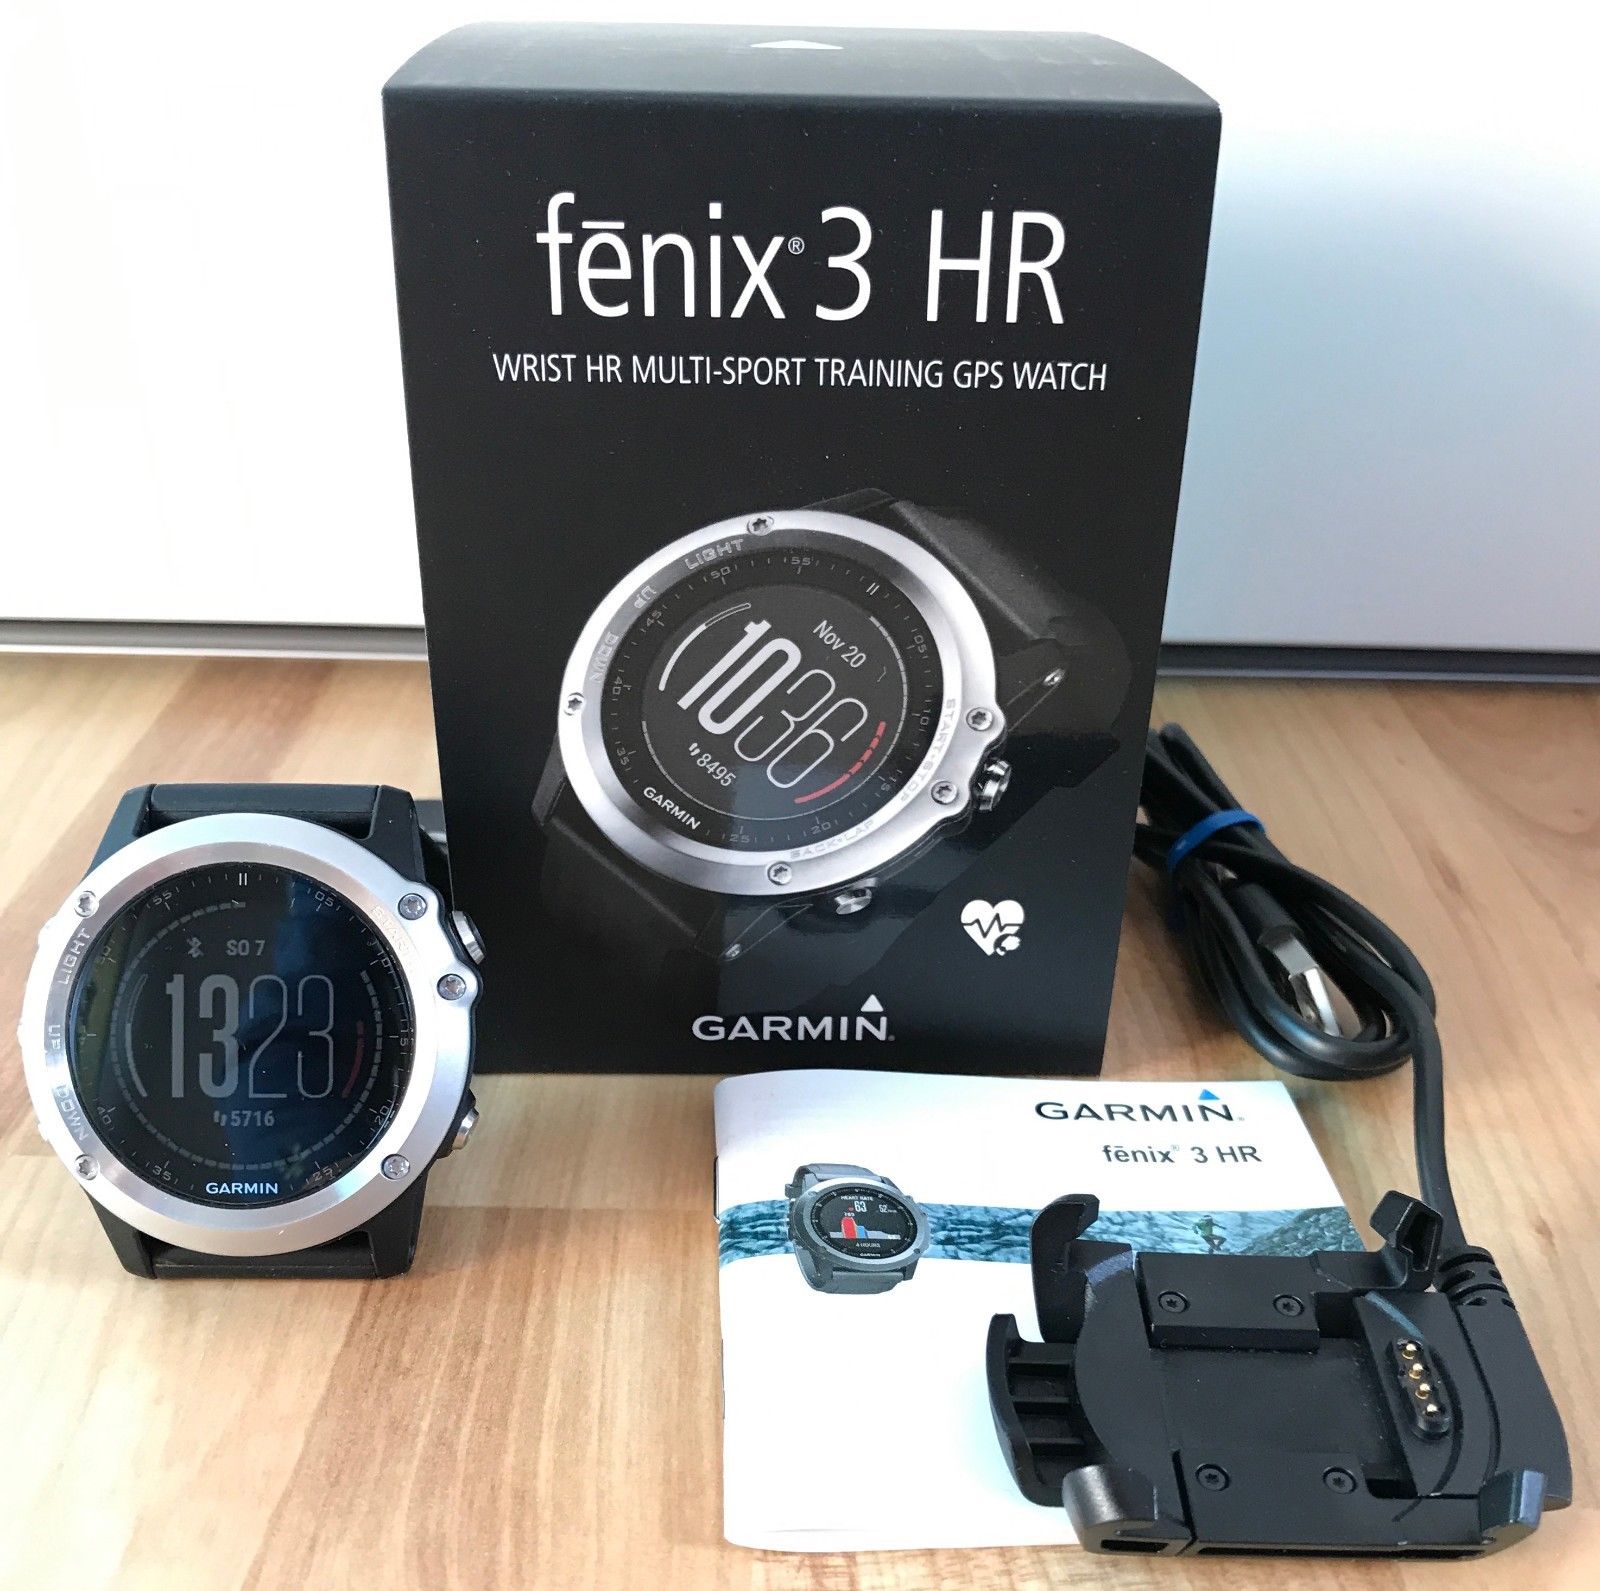 GARMIN fenix 3 HR Multi-Sport Training GPS Watch (OVP)